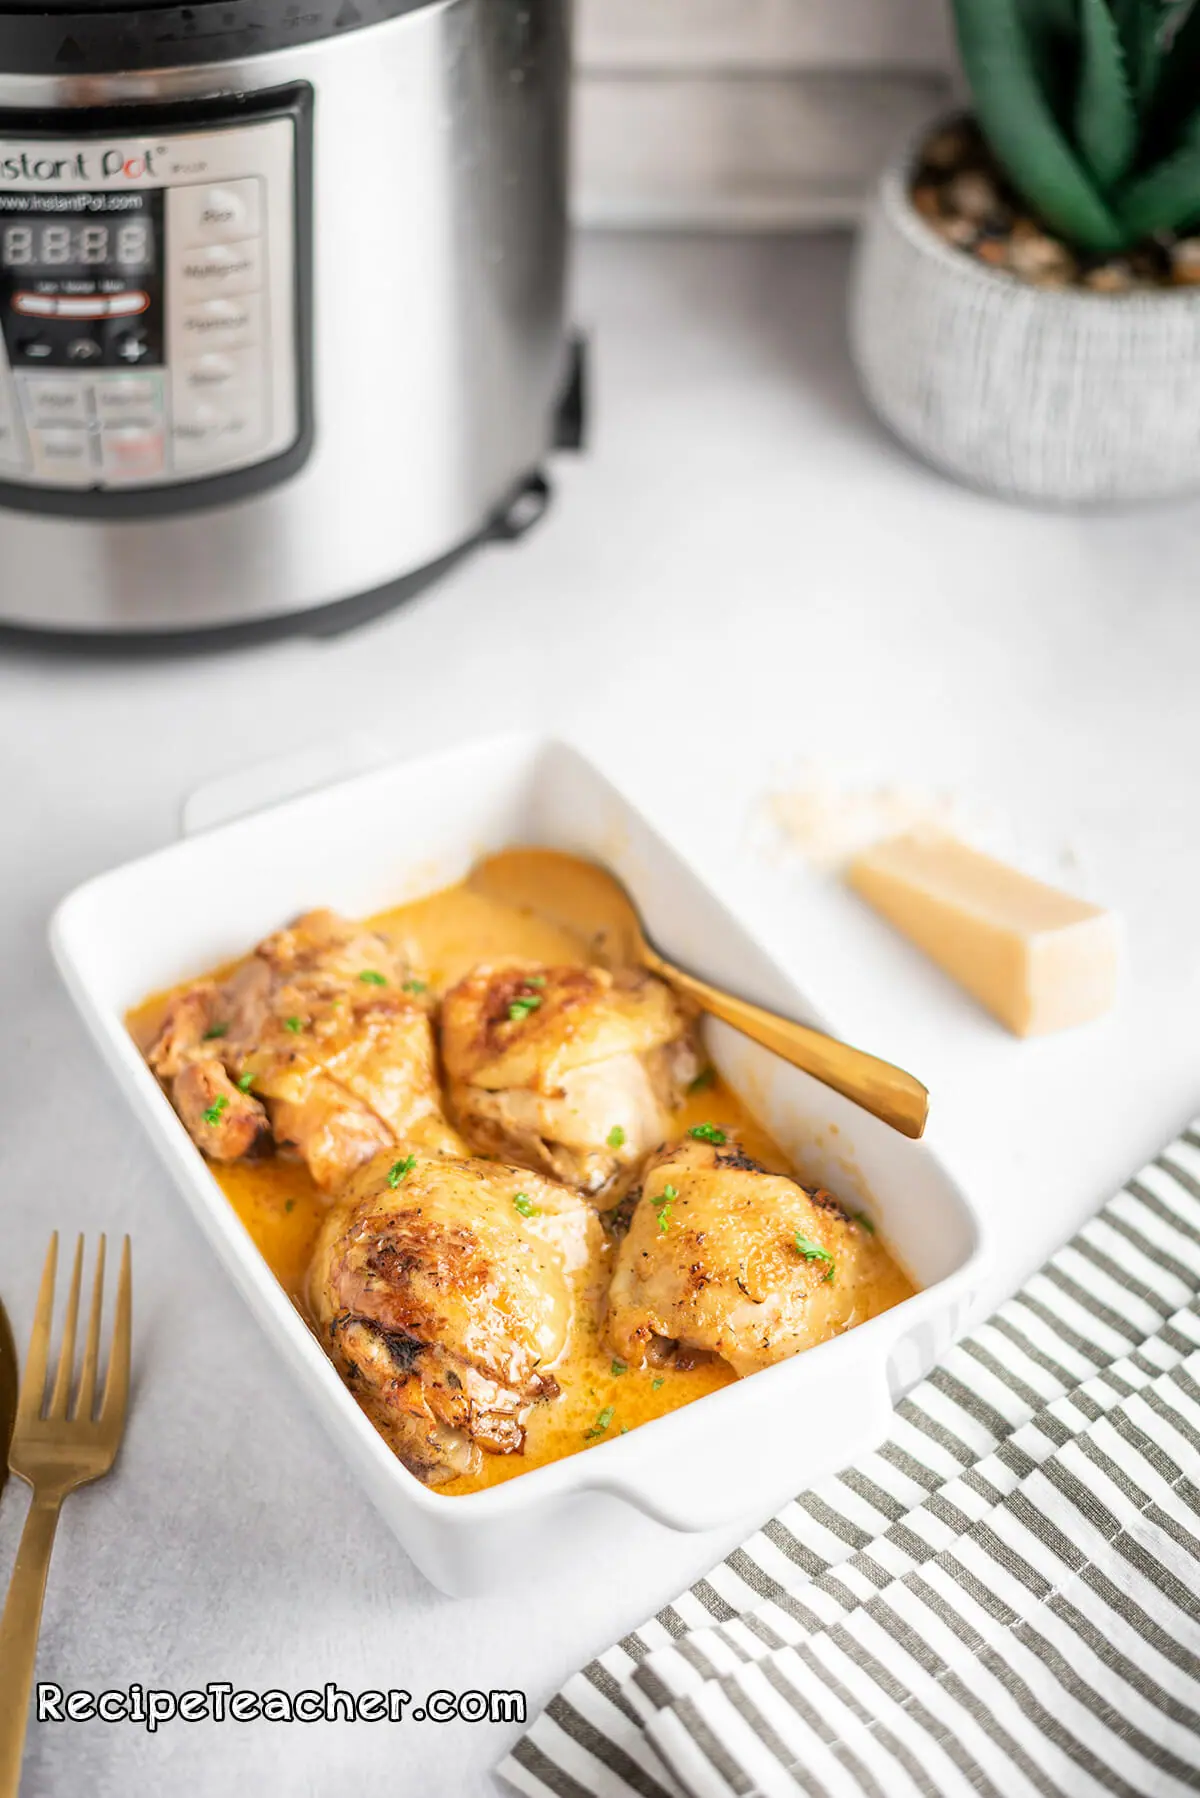 Recipe for Instant Pot creamy garlic chicken thighs